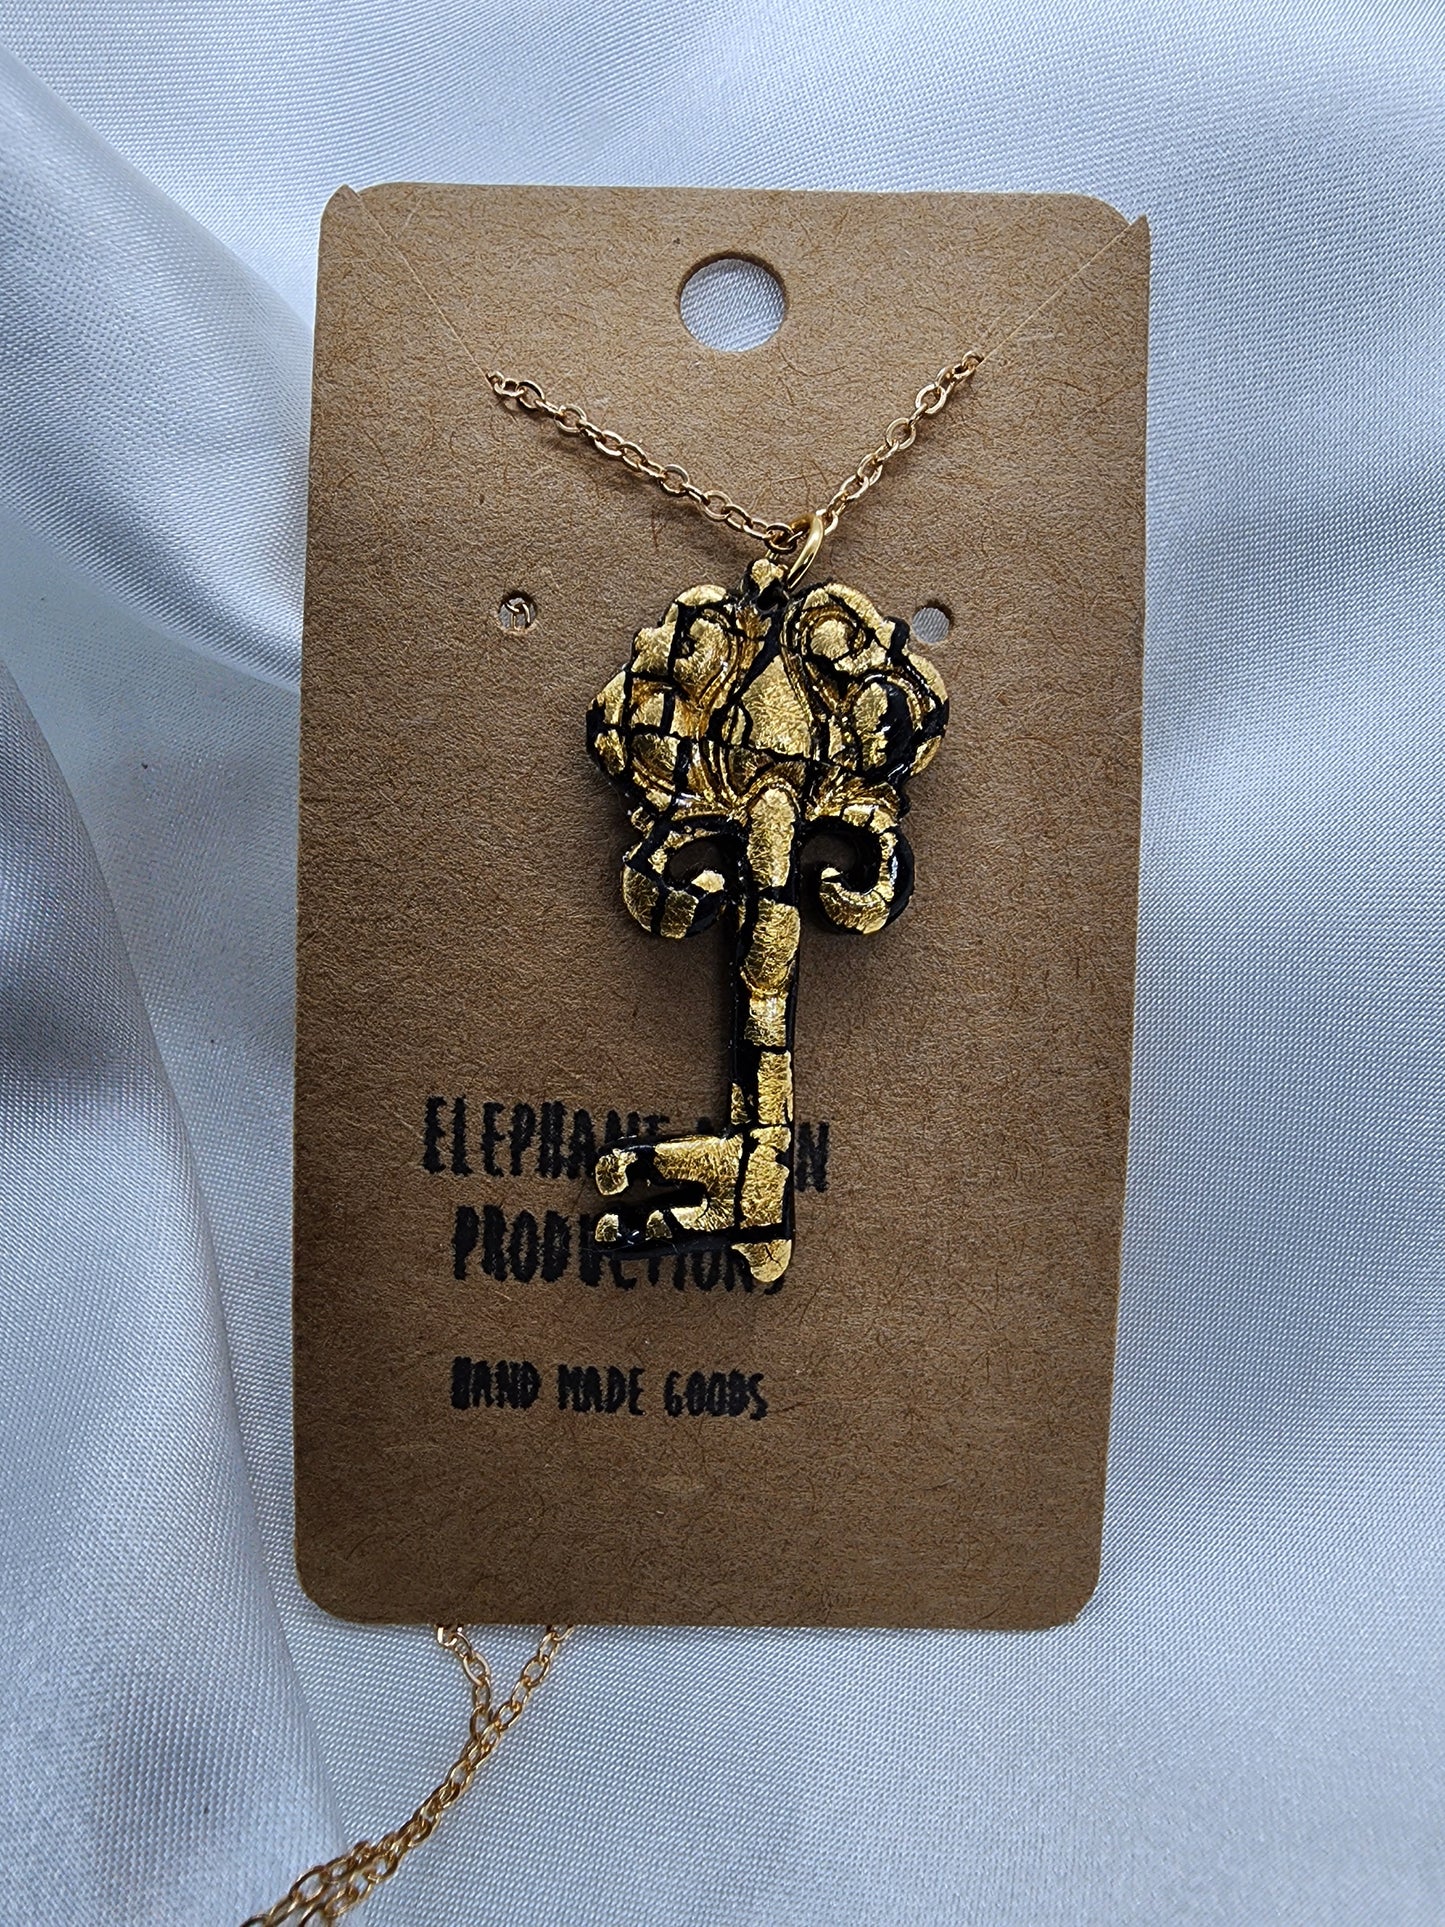 Golden Key Necklace